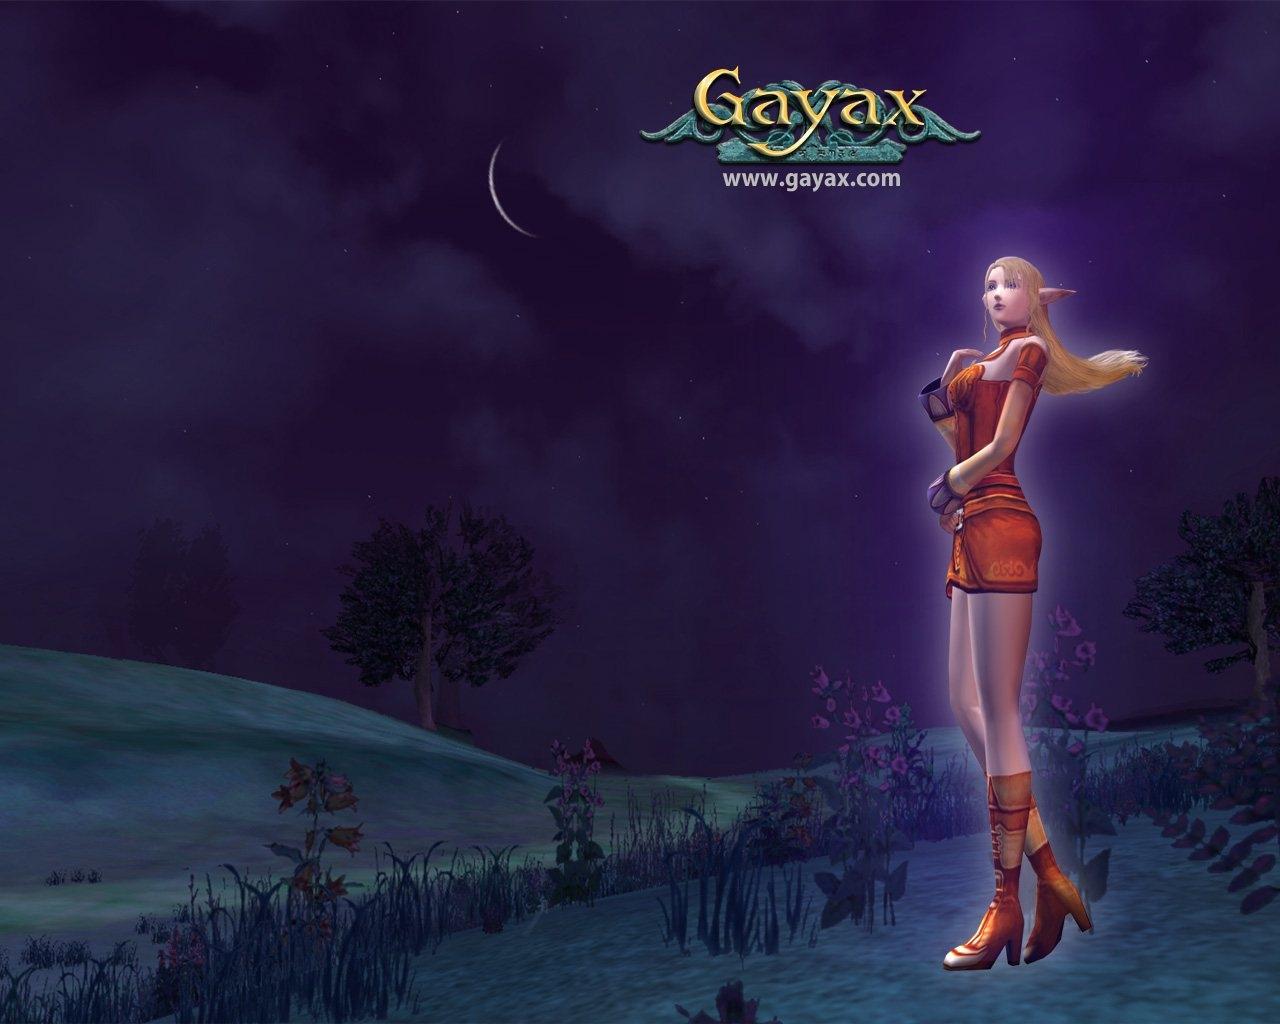 Gayax at 1600 x 1200 size wallpapers HD quality